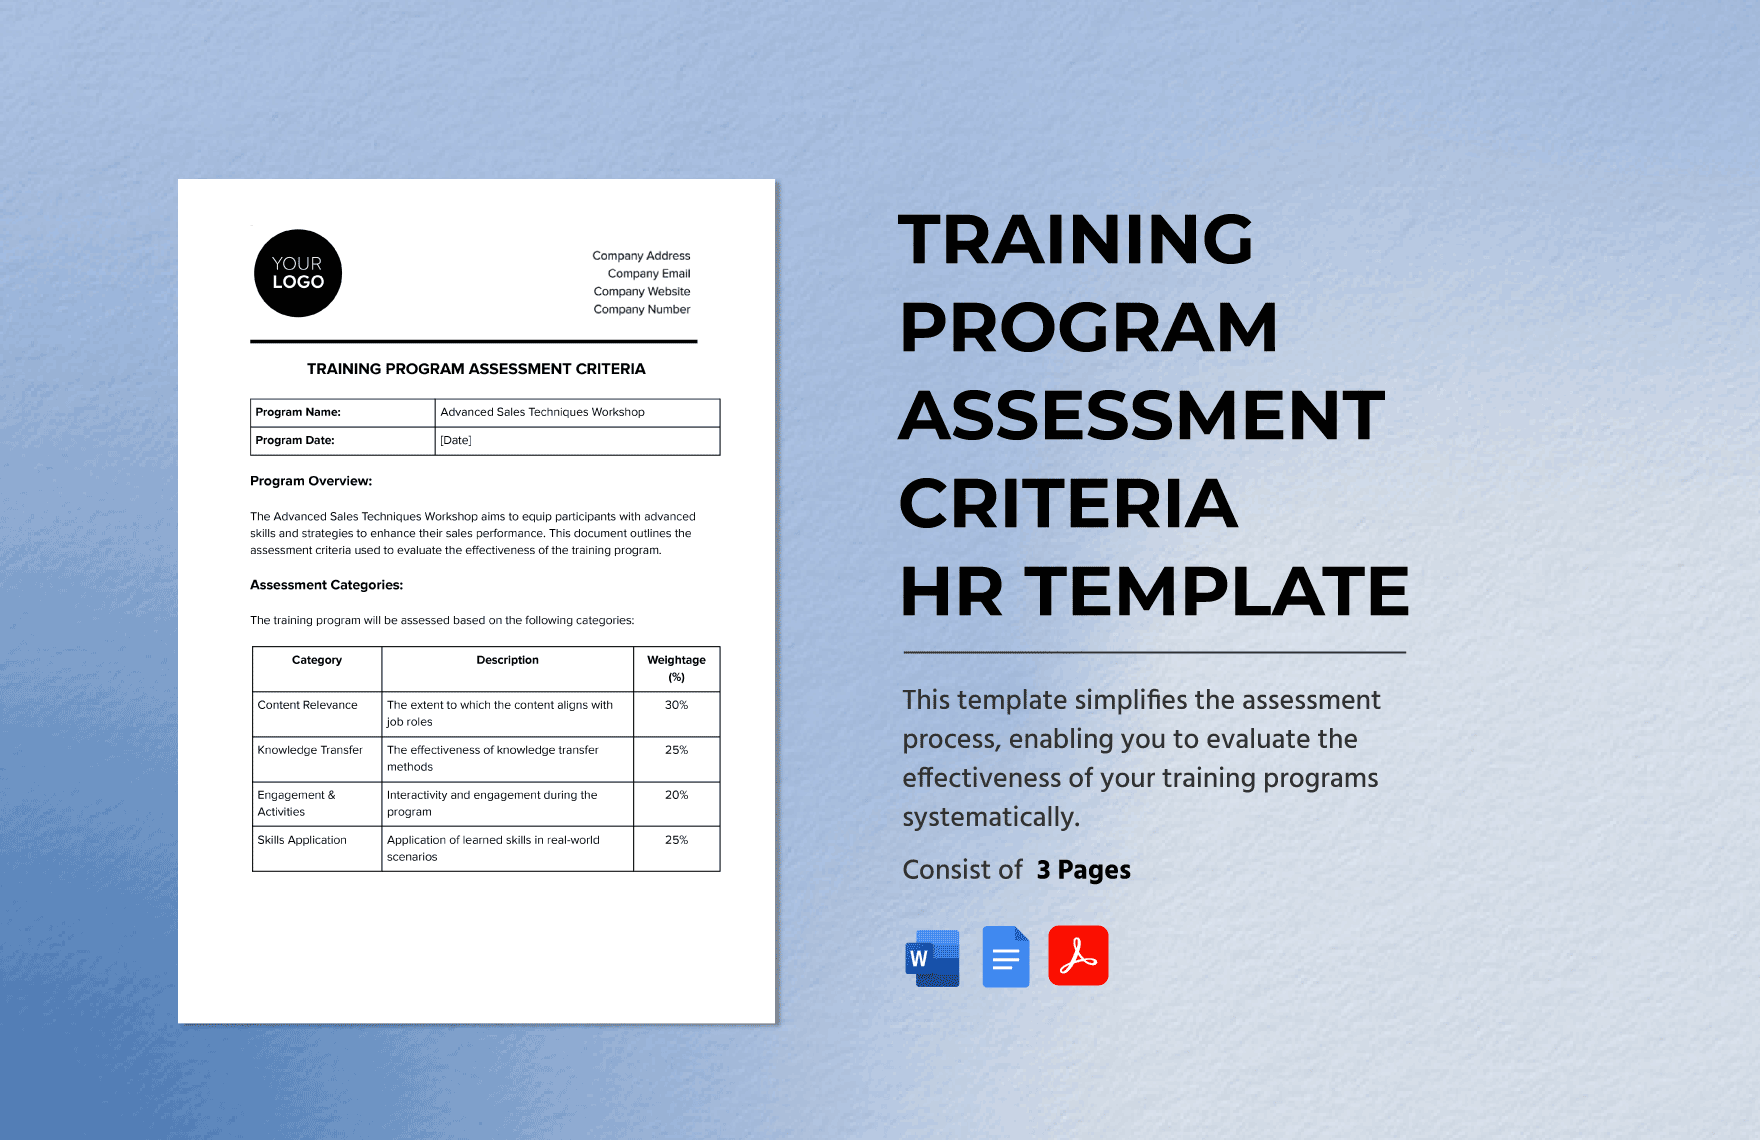 Training Program Assessment Criteria HR Template